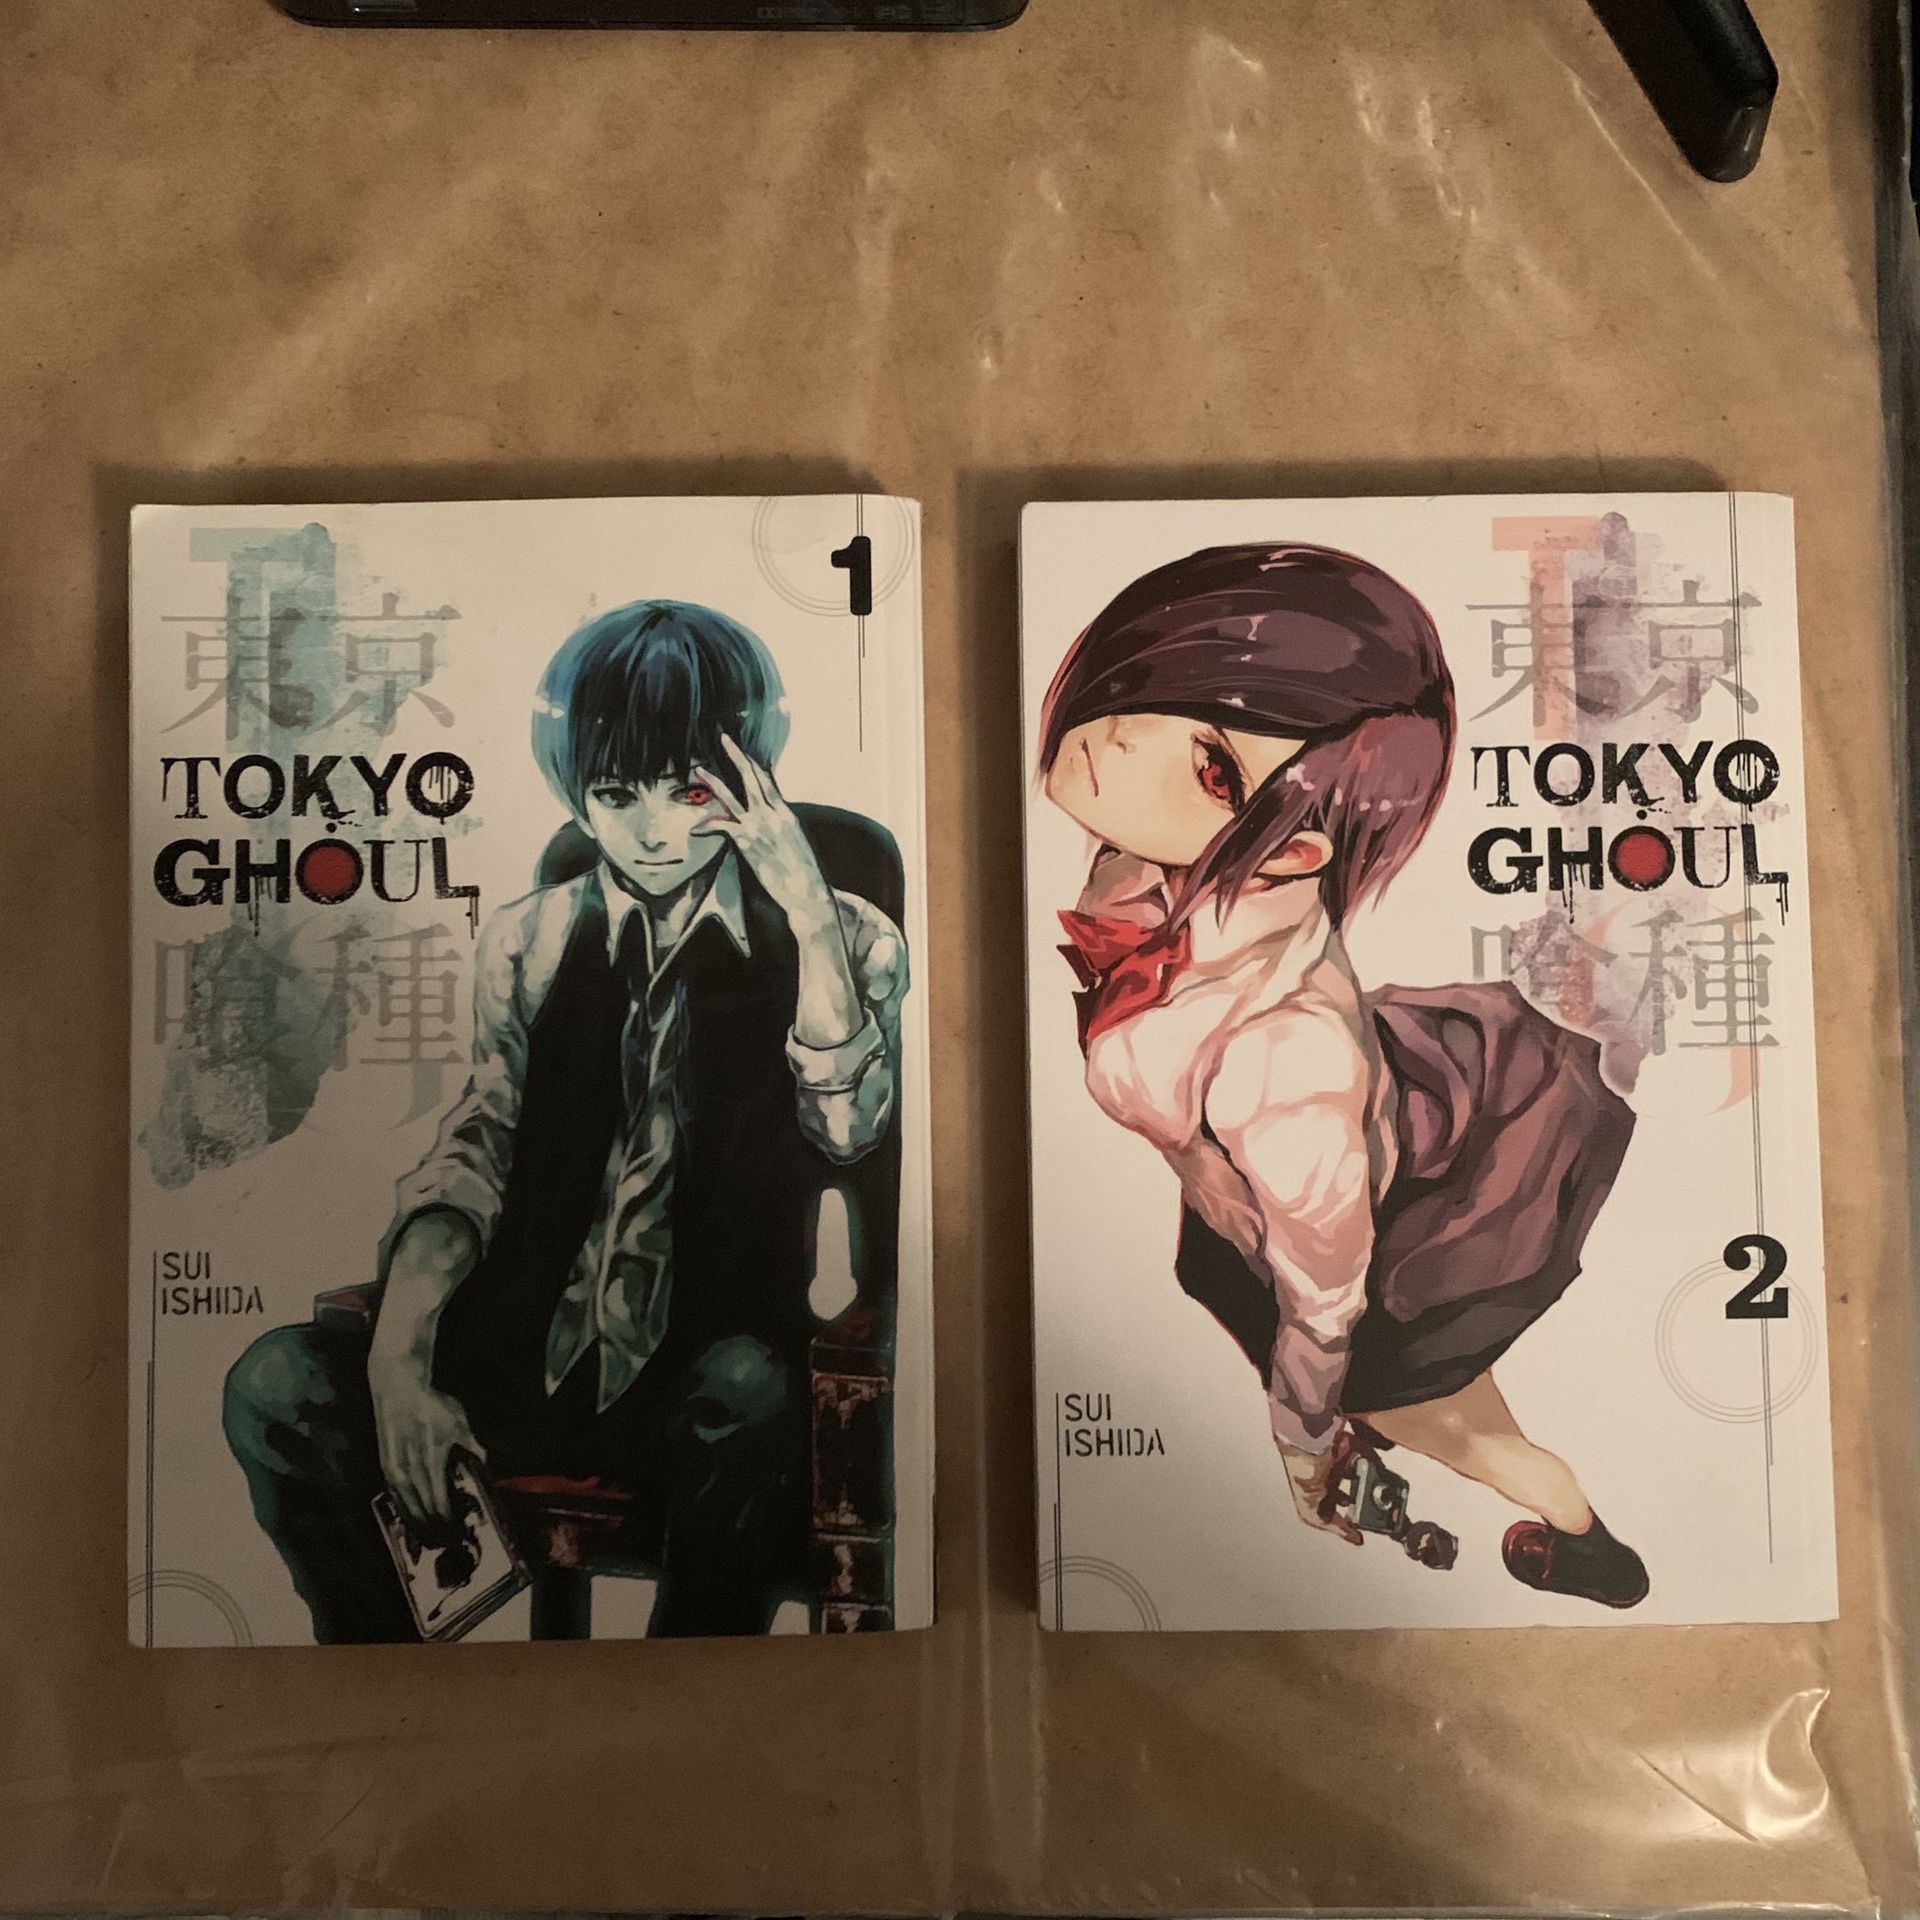 Tokyo Ghoul manga’s 1 & 2